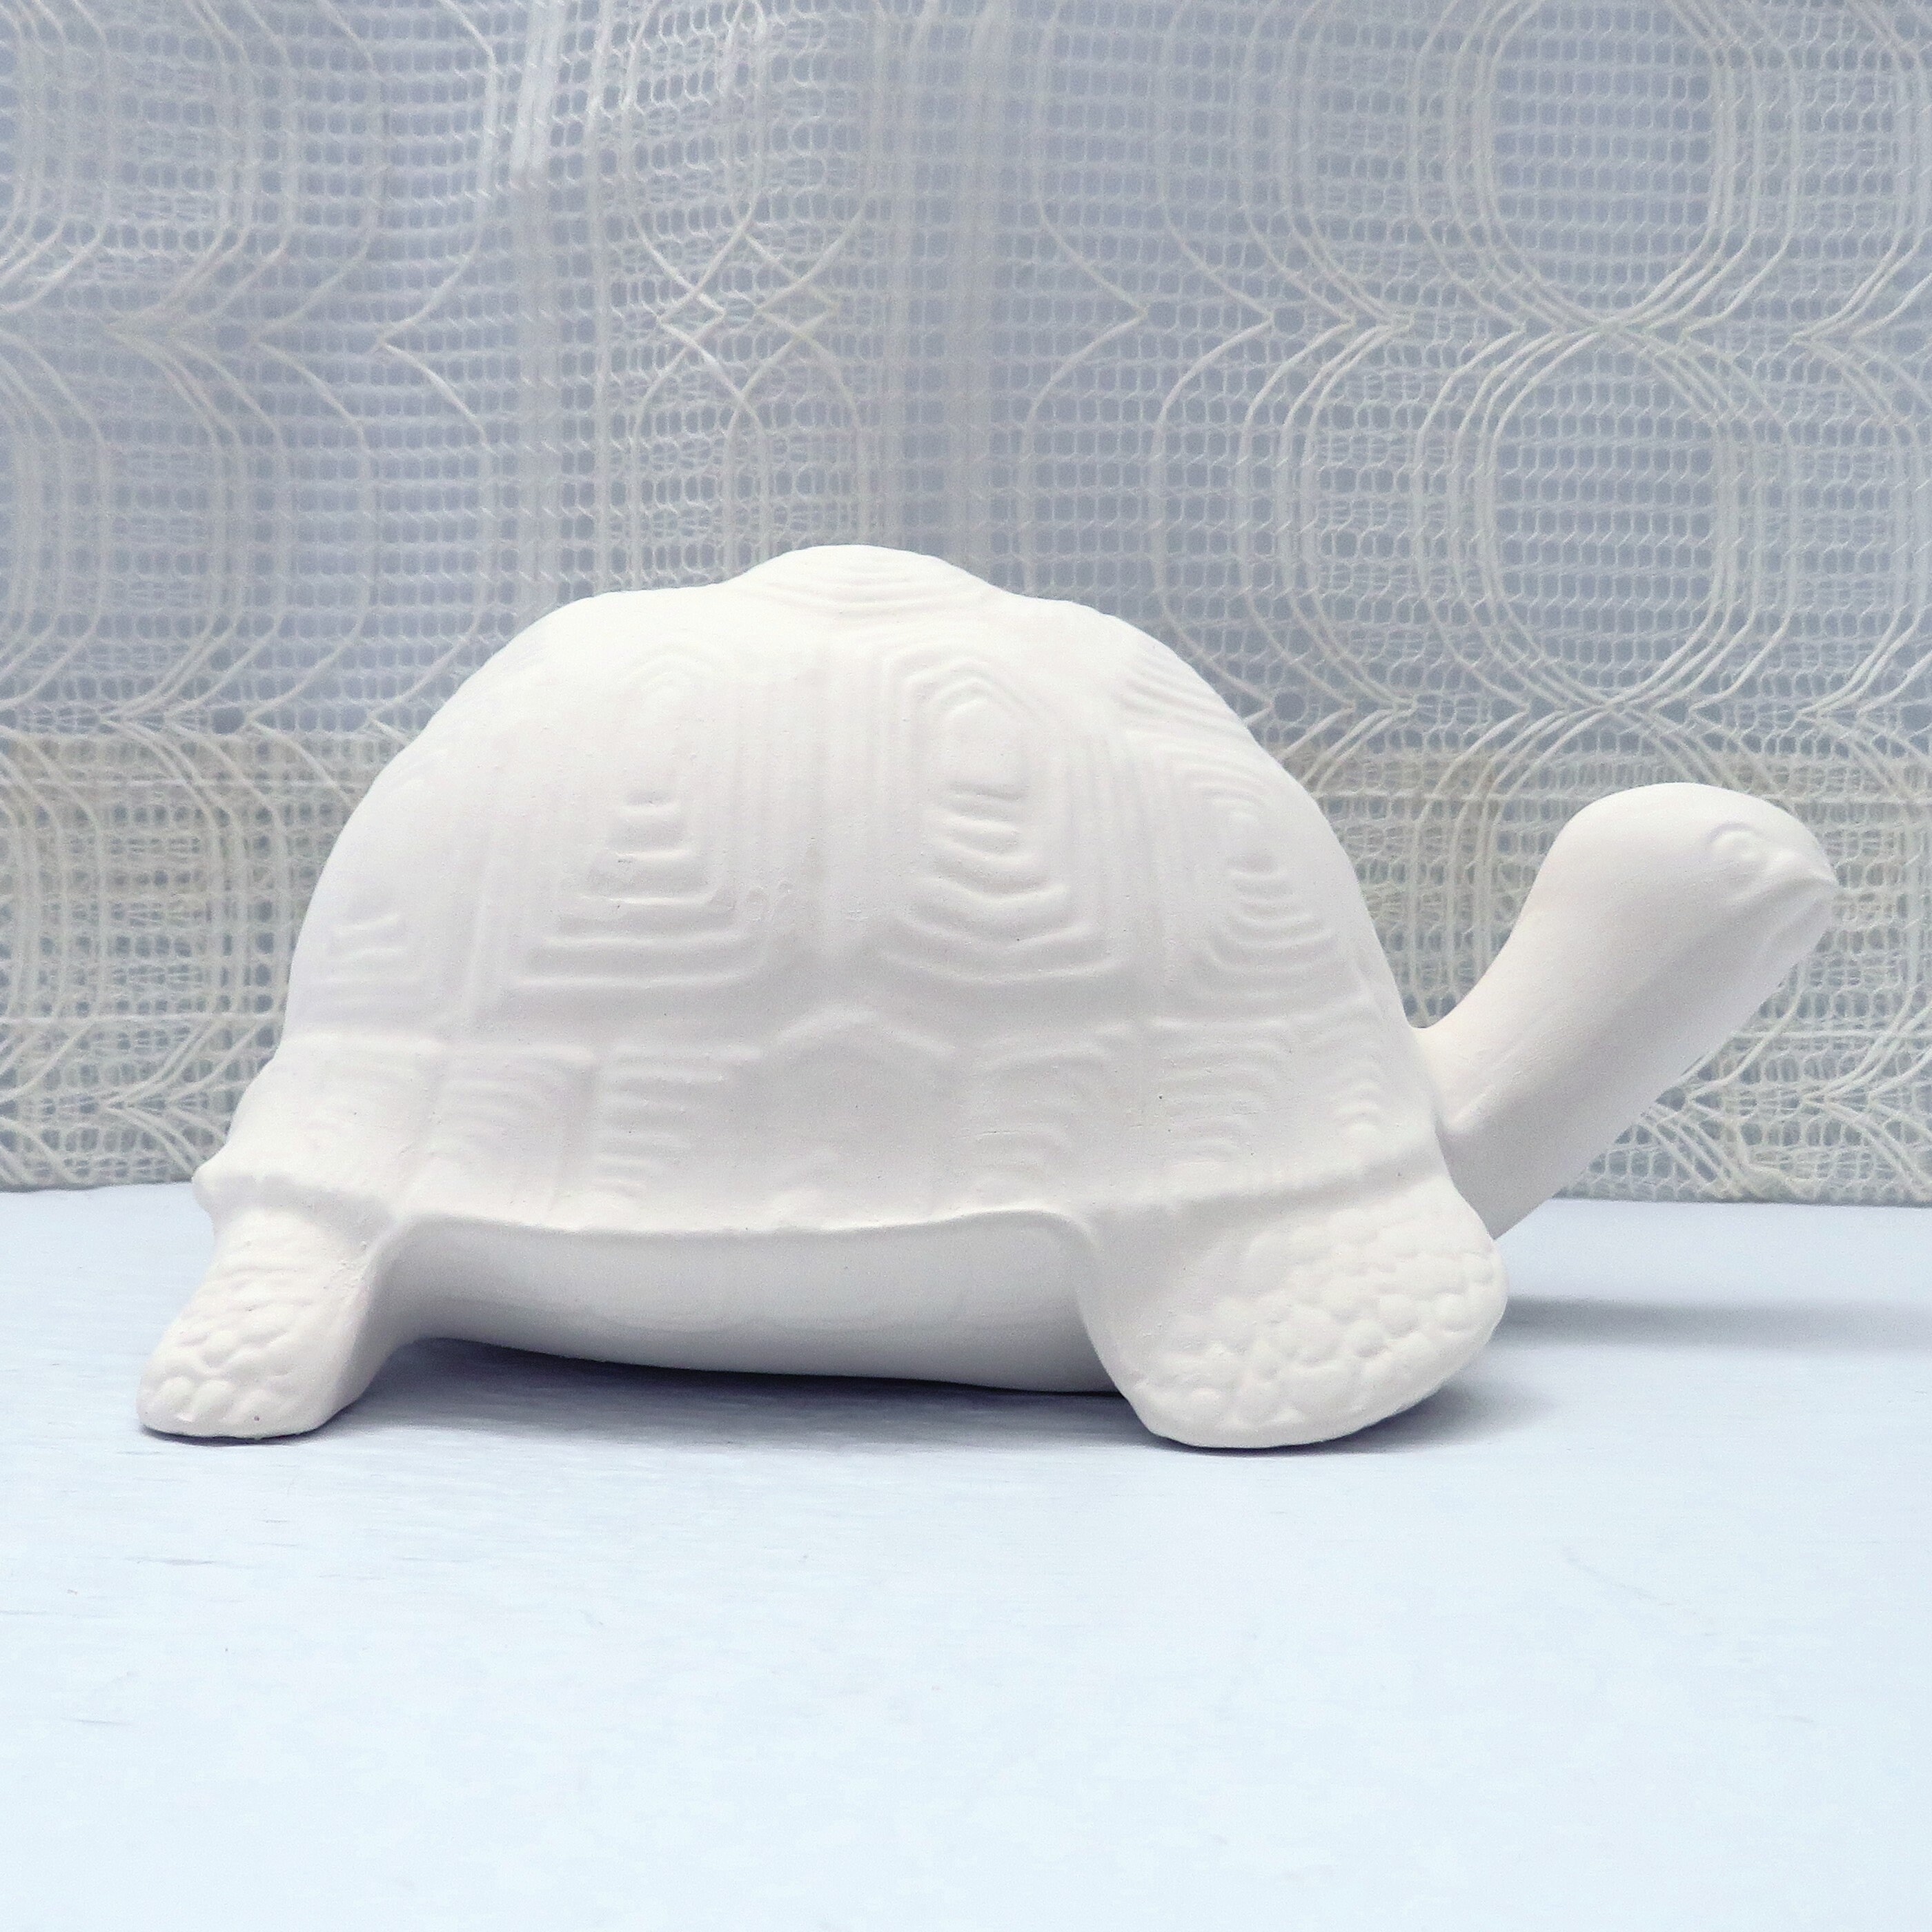 Murtle Little Garden Turtle Statue - Paintable Ceramic Figurines